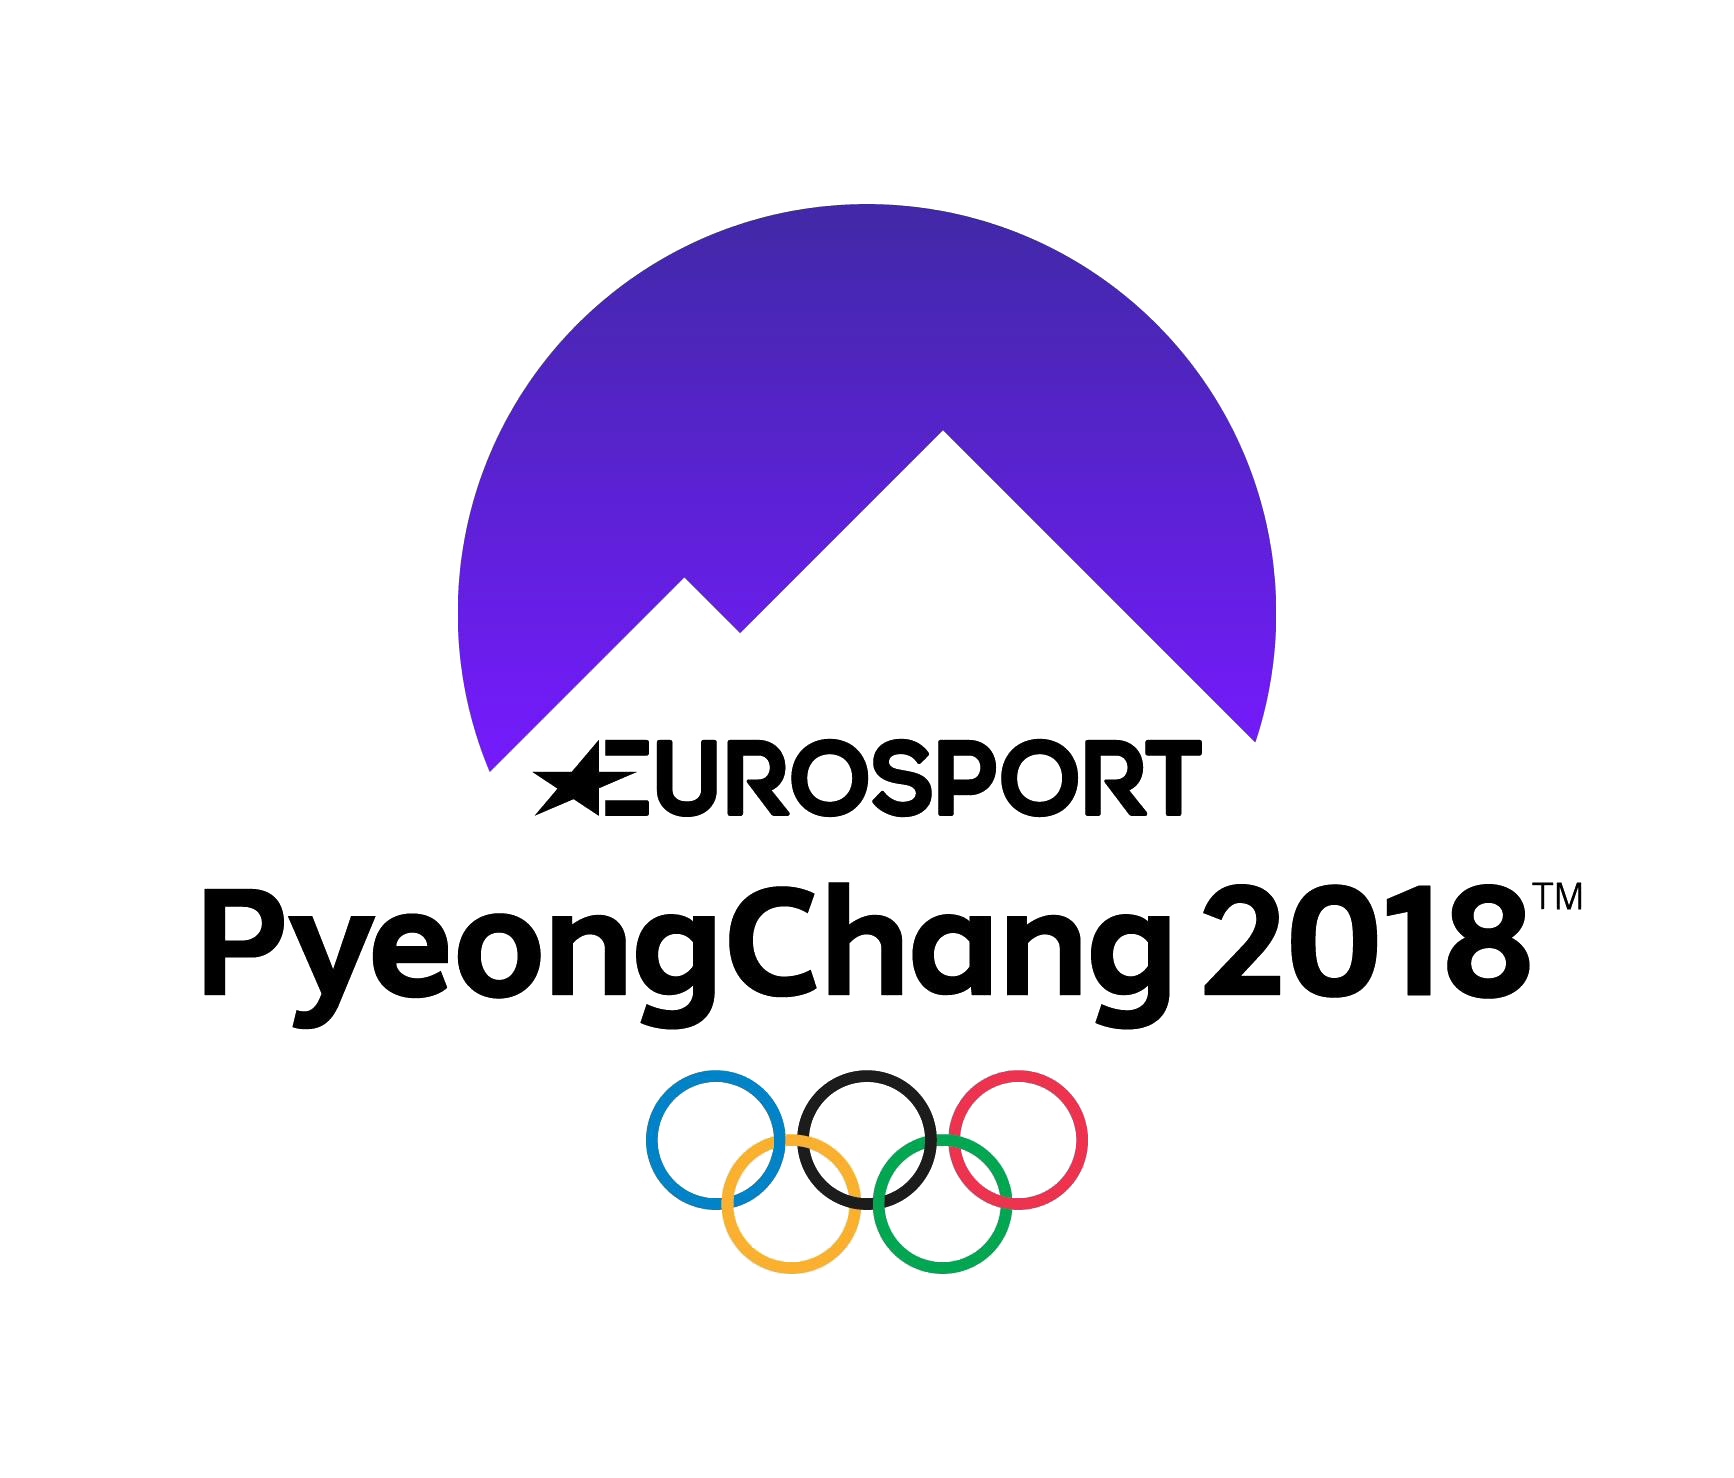 PyeongChang 2018 Olympics Logo PNG Image